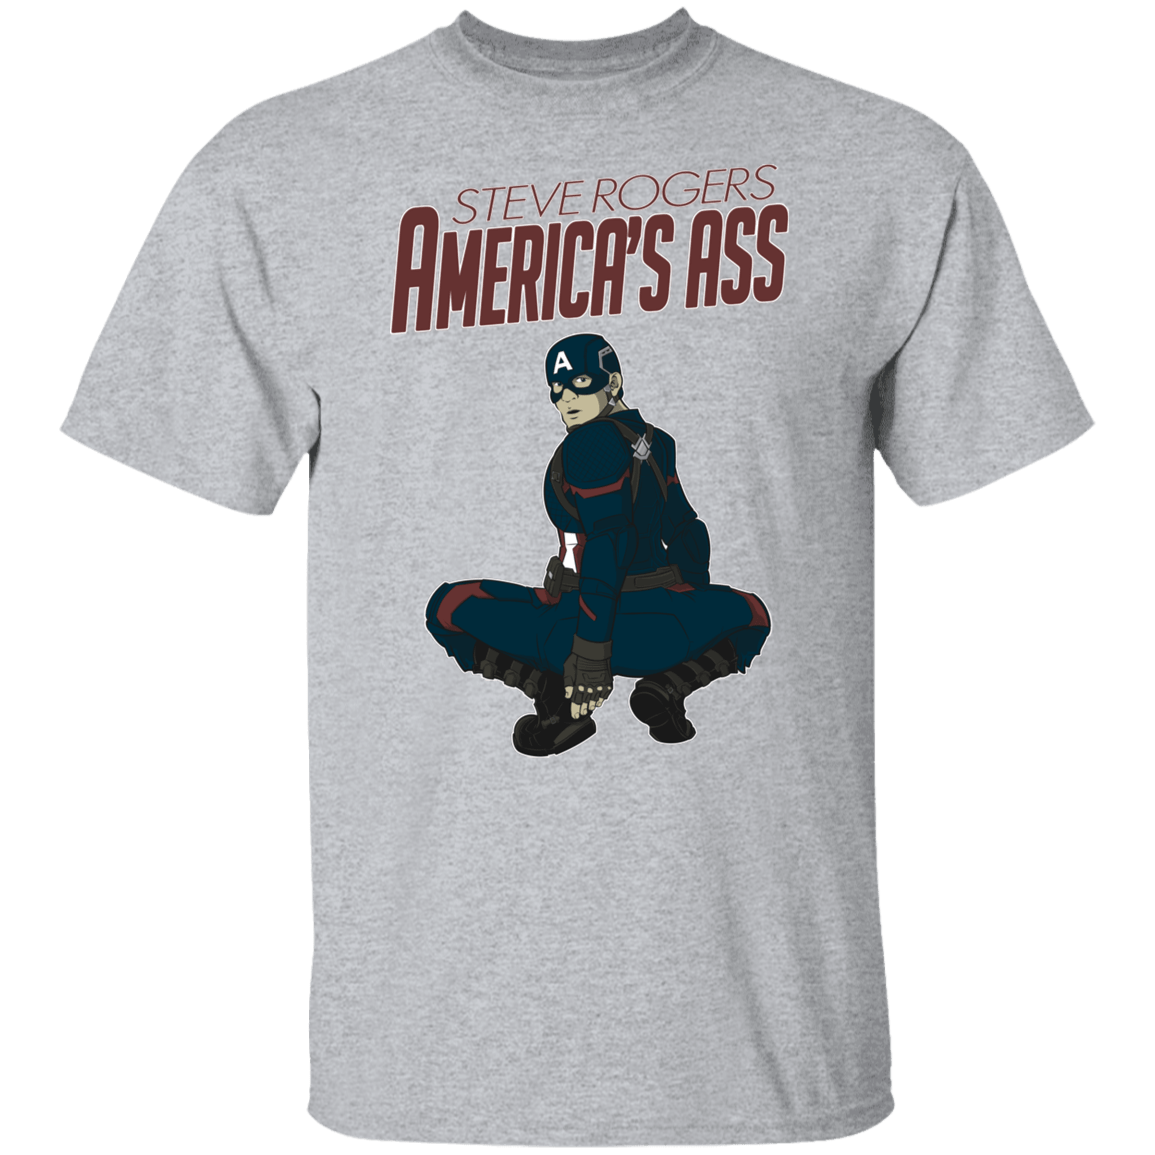 T-Shirts Sport Grey / S Captain Anaconda T-Shirt